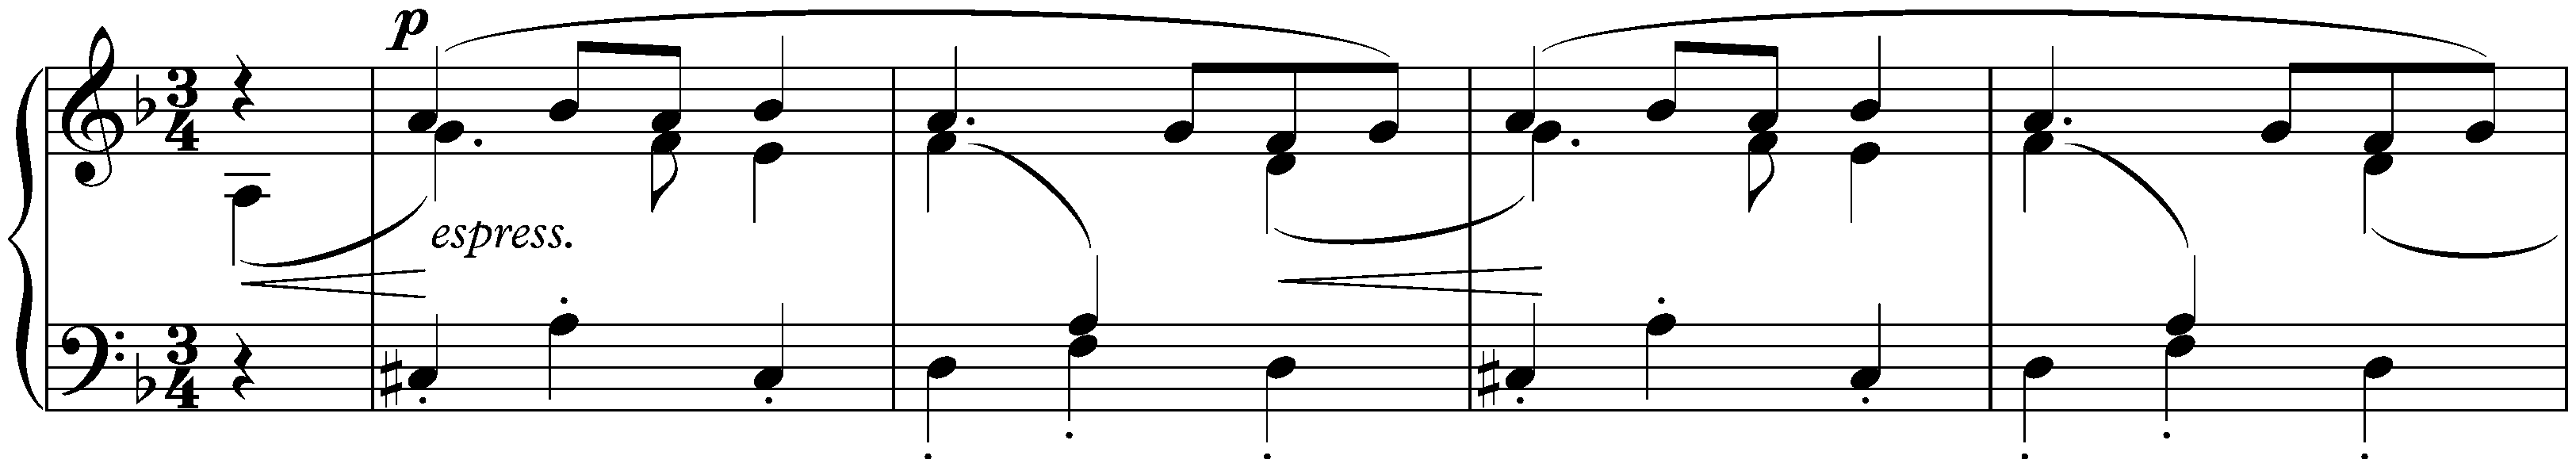 Sixteen Waltzes, op. 39; 16. D minor (simplified version)